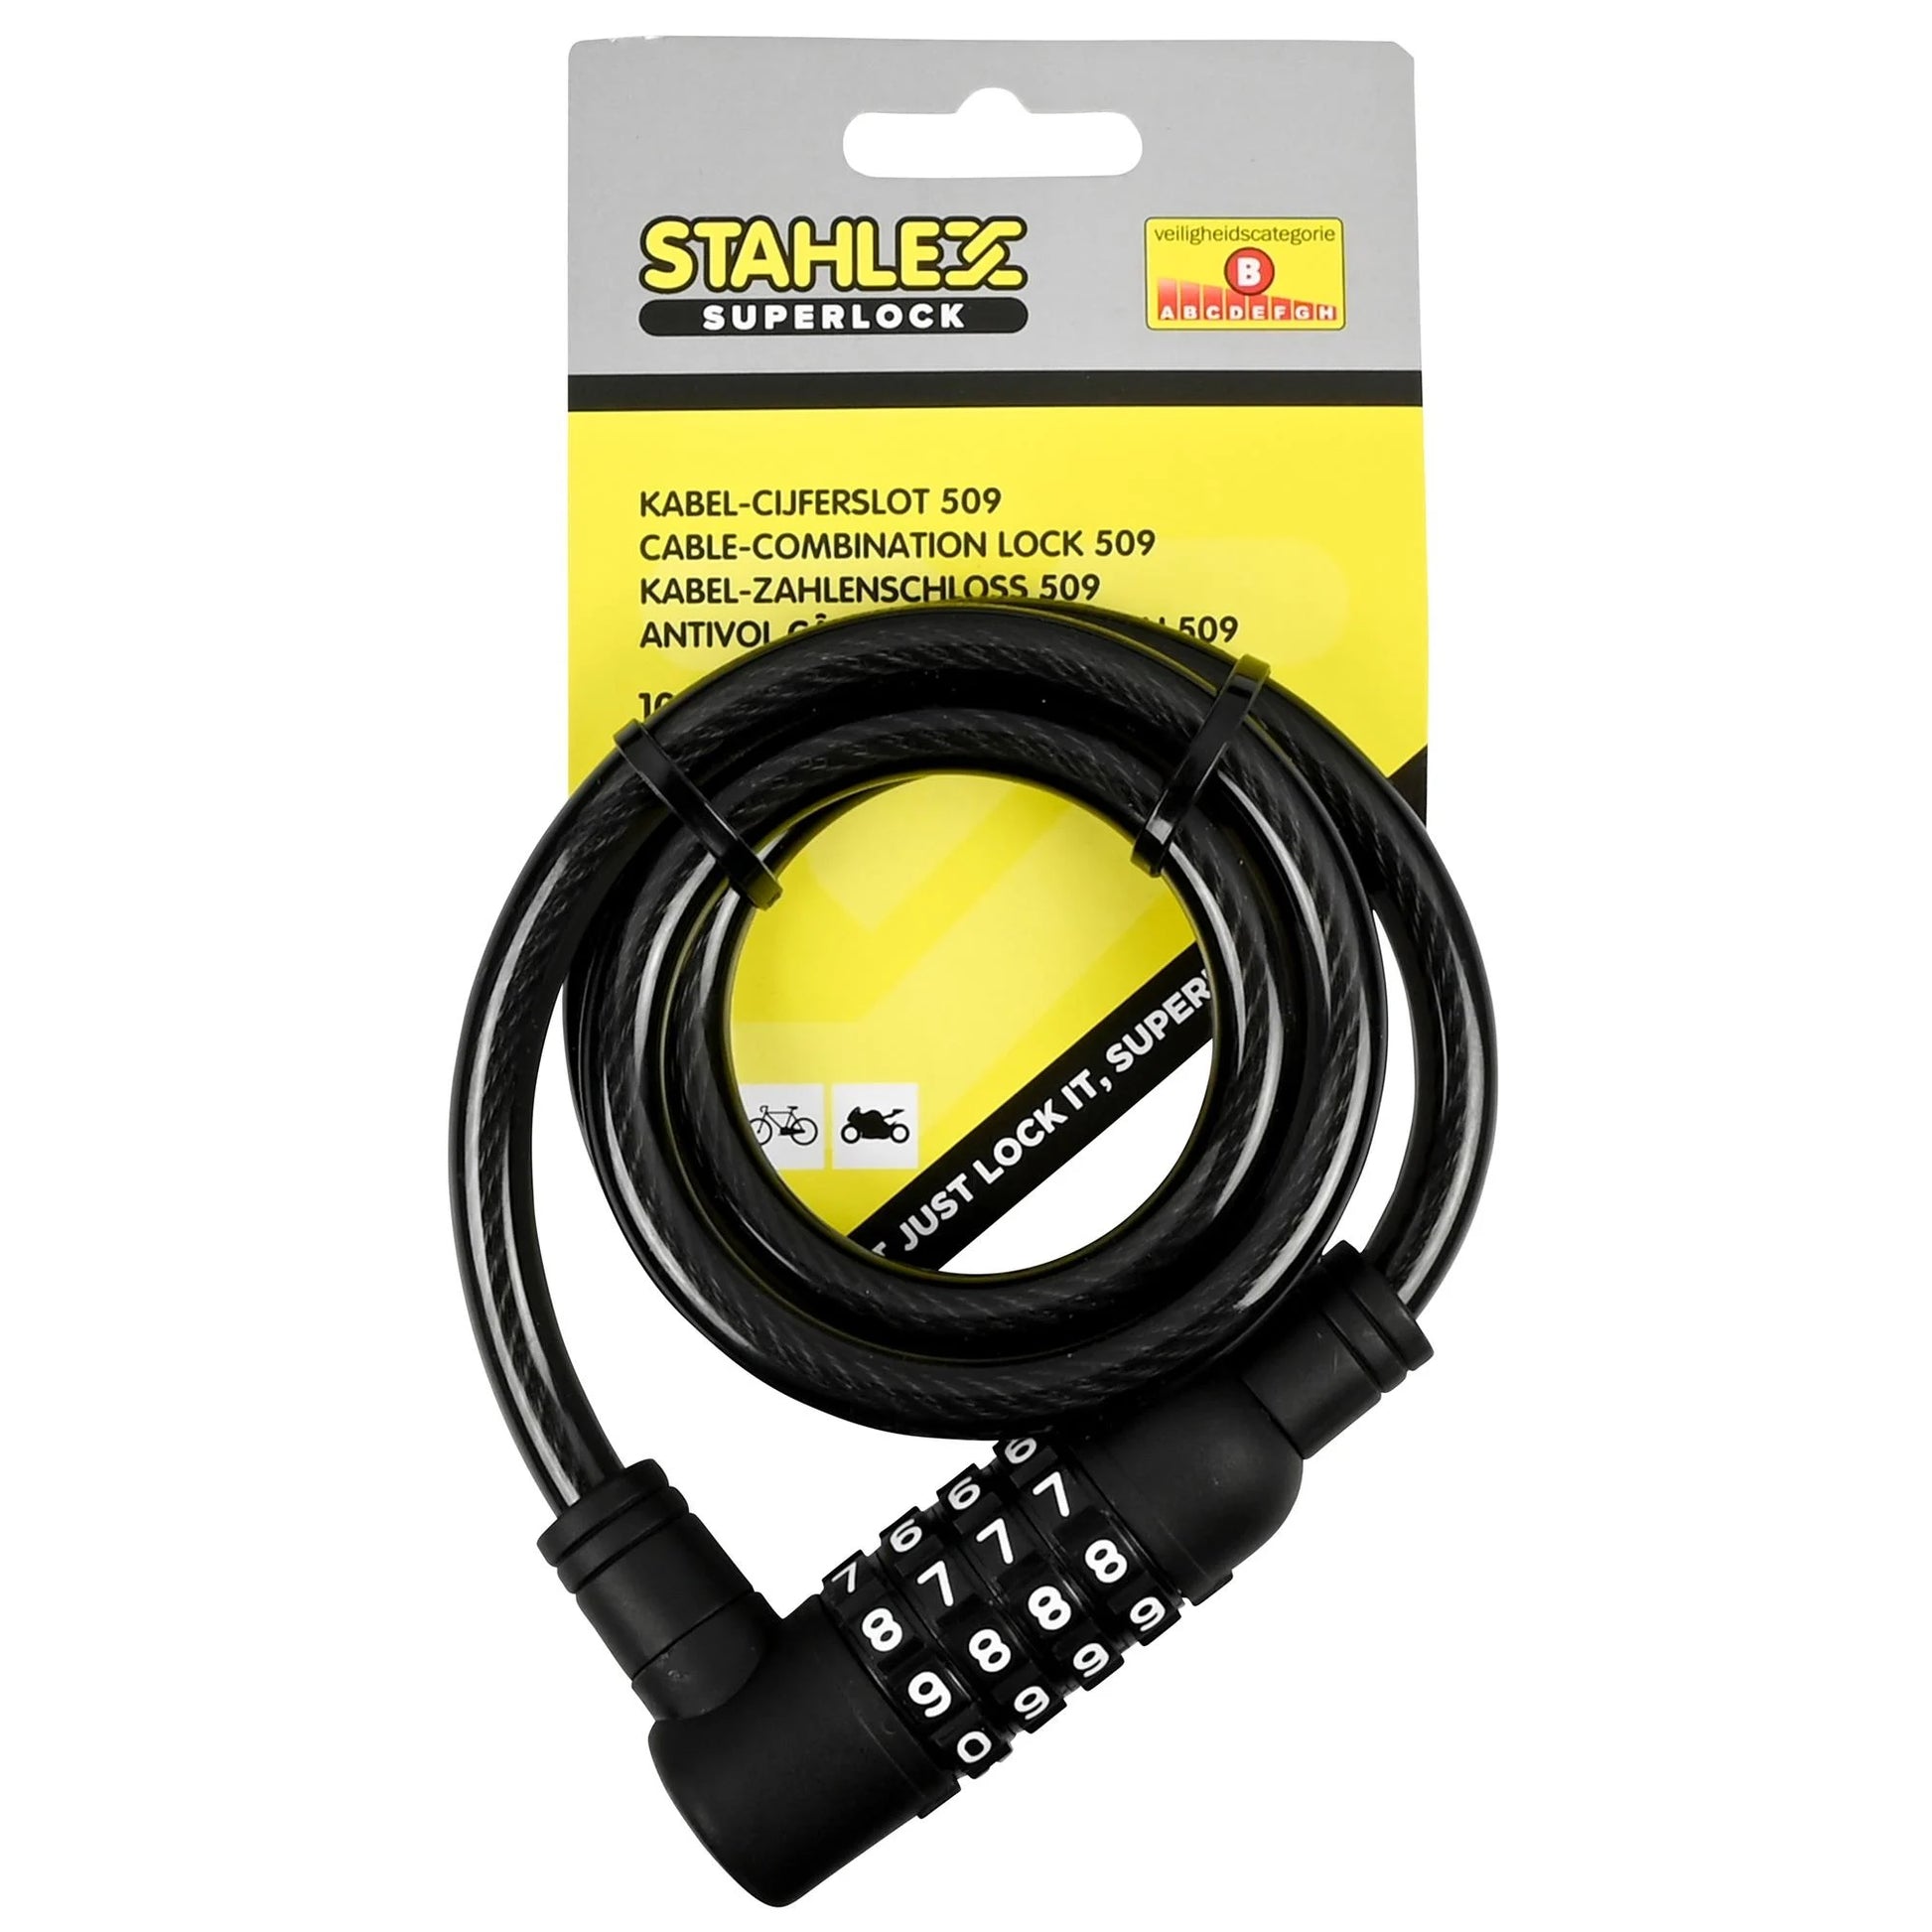 Stahlex Kabel cijferslot Fiets 509 10 x 1000 mm